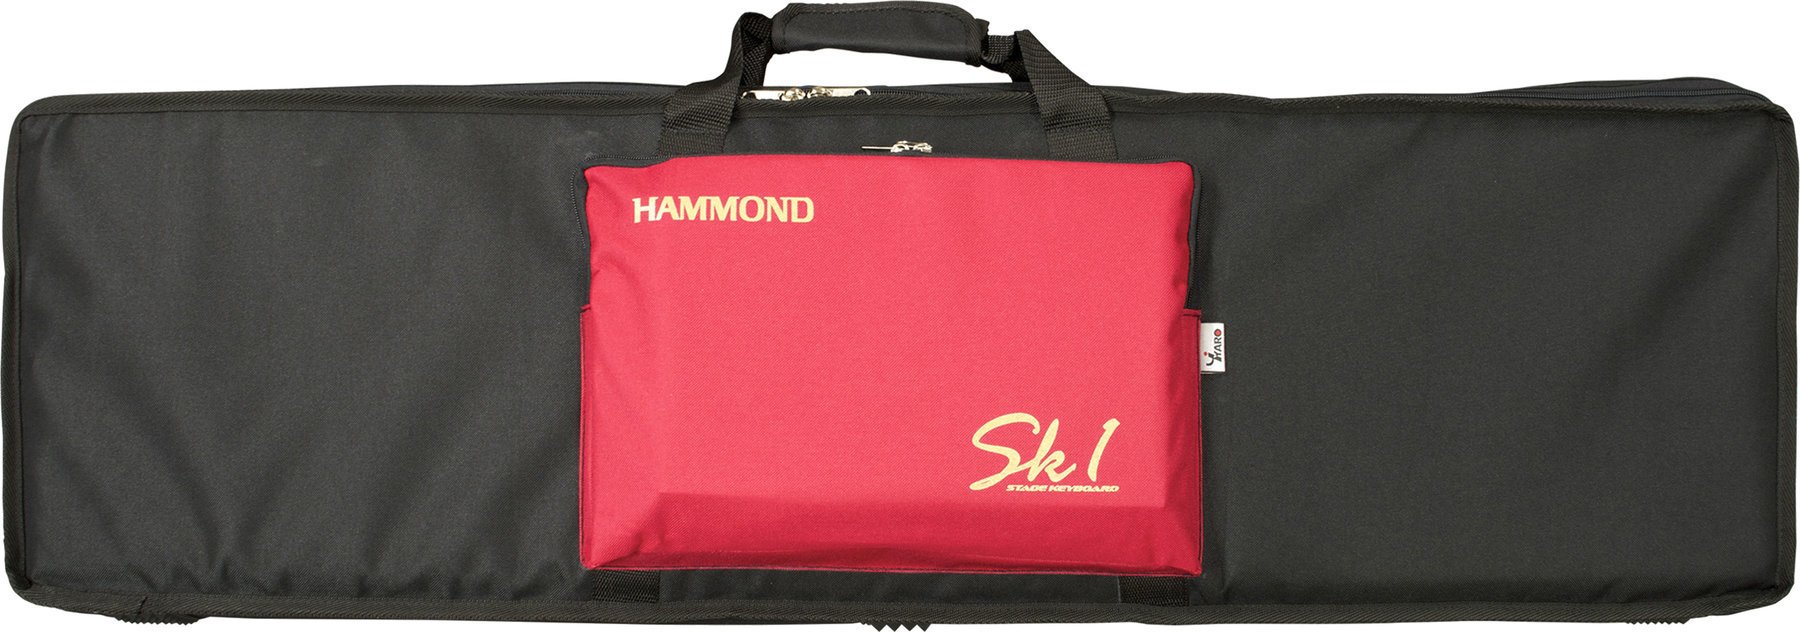 Bolsa para teclado Hammond Softbag SK1-73